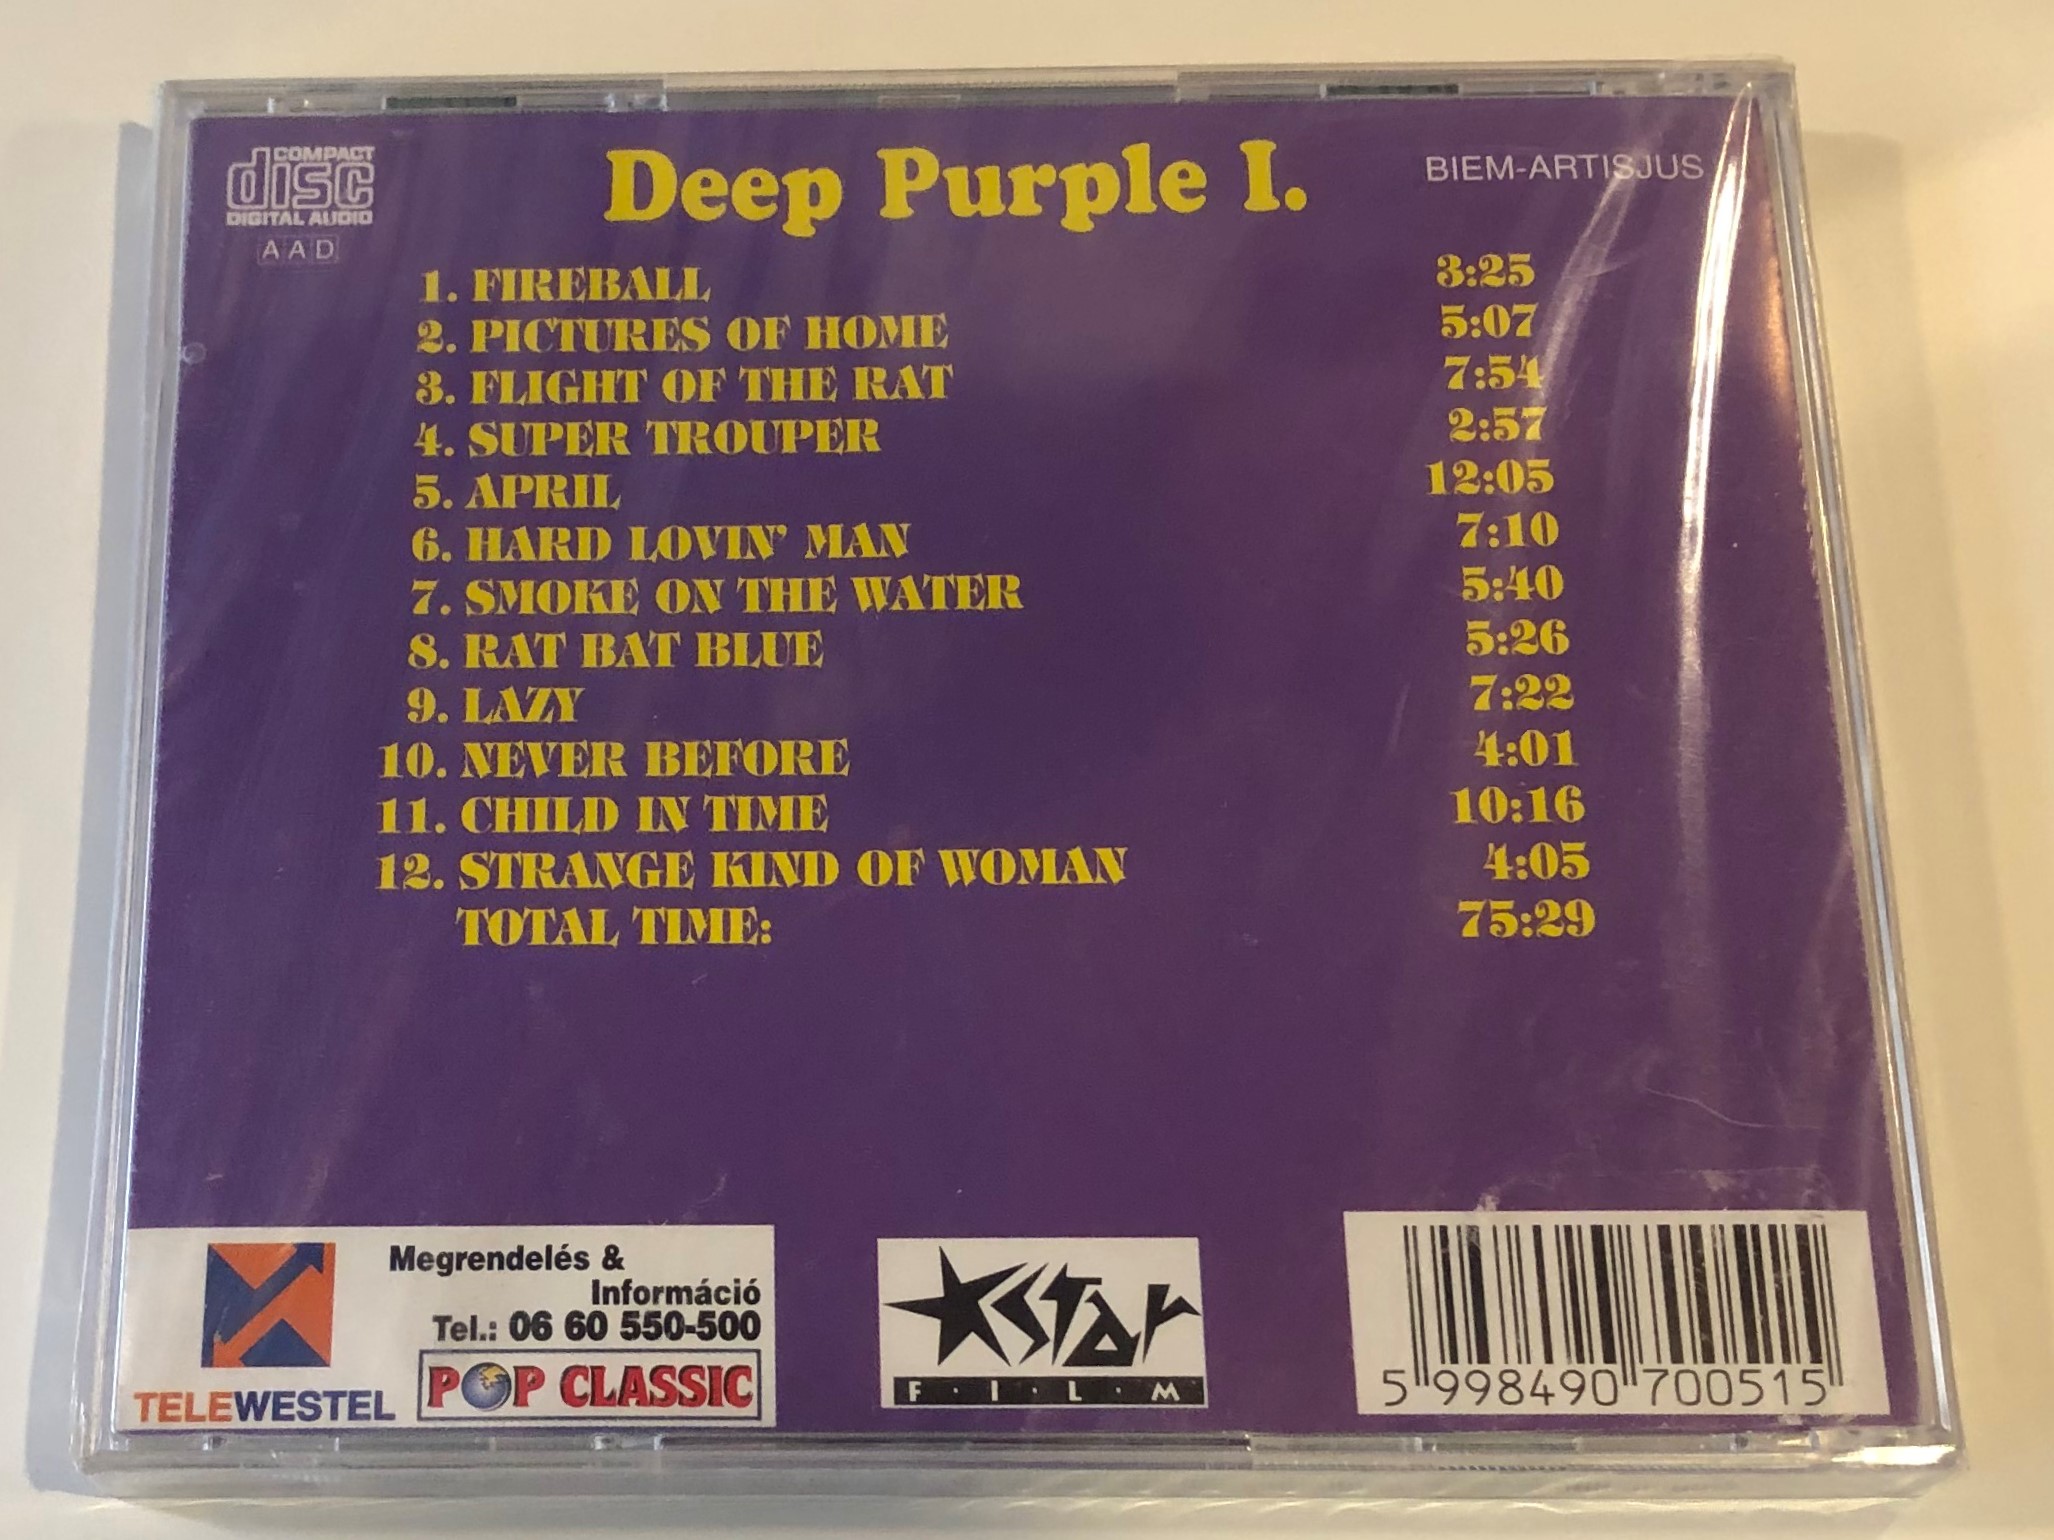 deep-purple-best-of-i.-pop-classic-total-time-75.29-audio-cd-5998490700515-2-.jpg